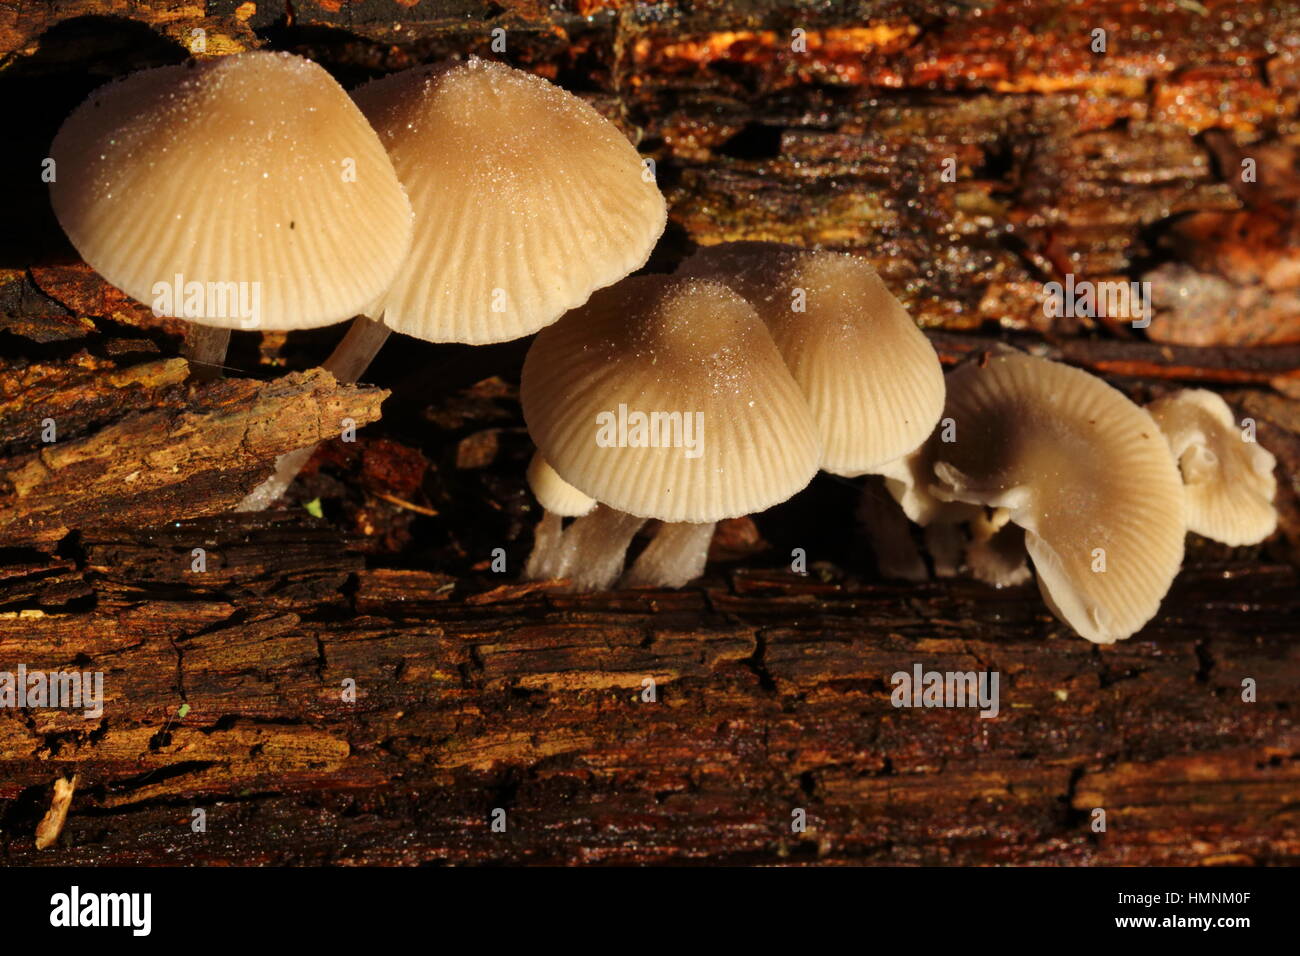 Mycena bonnet mushrooms in frost Stock Photo